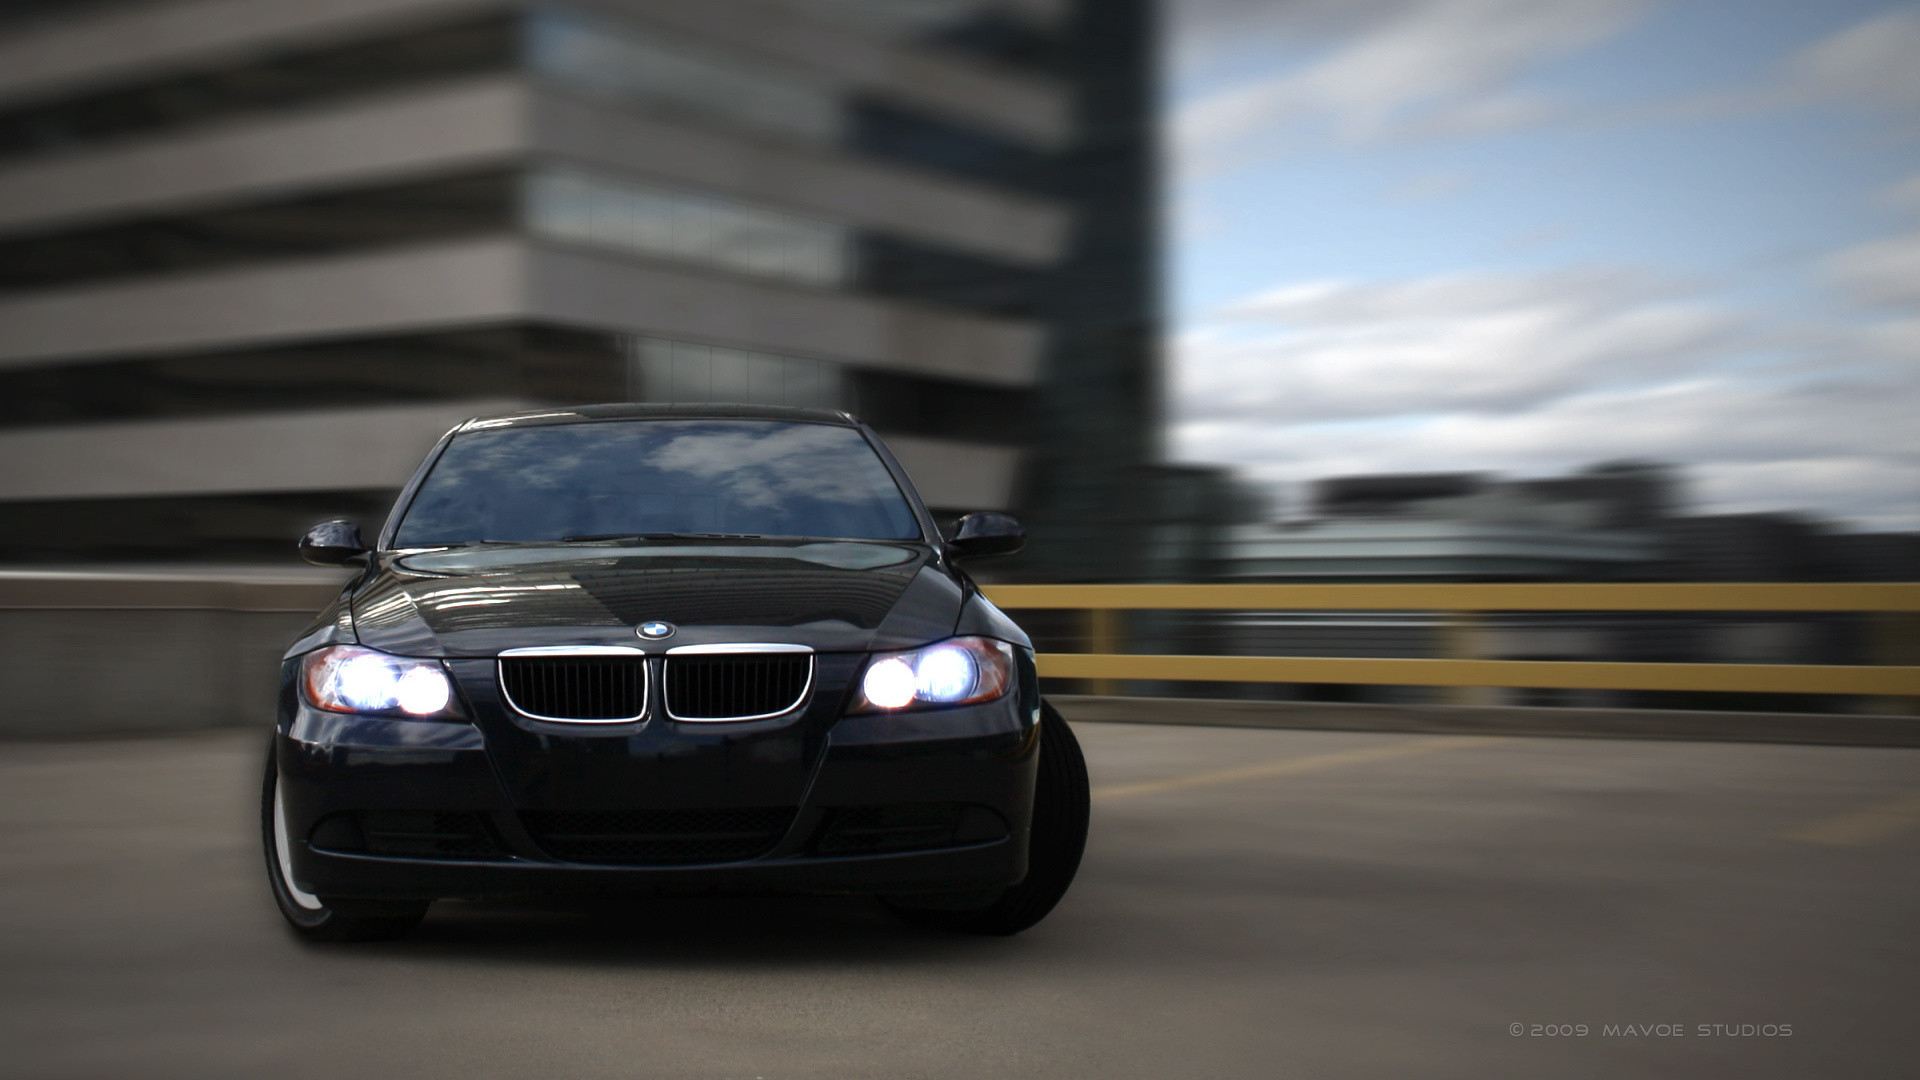 1920x1080 ... Best desktop wallpaper of BMW M3, image of black, drift | ImageBank.